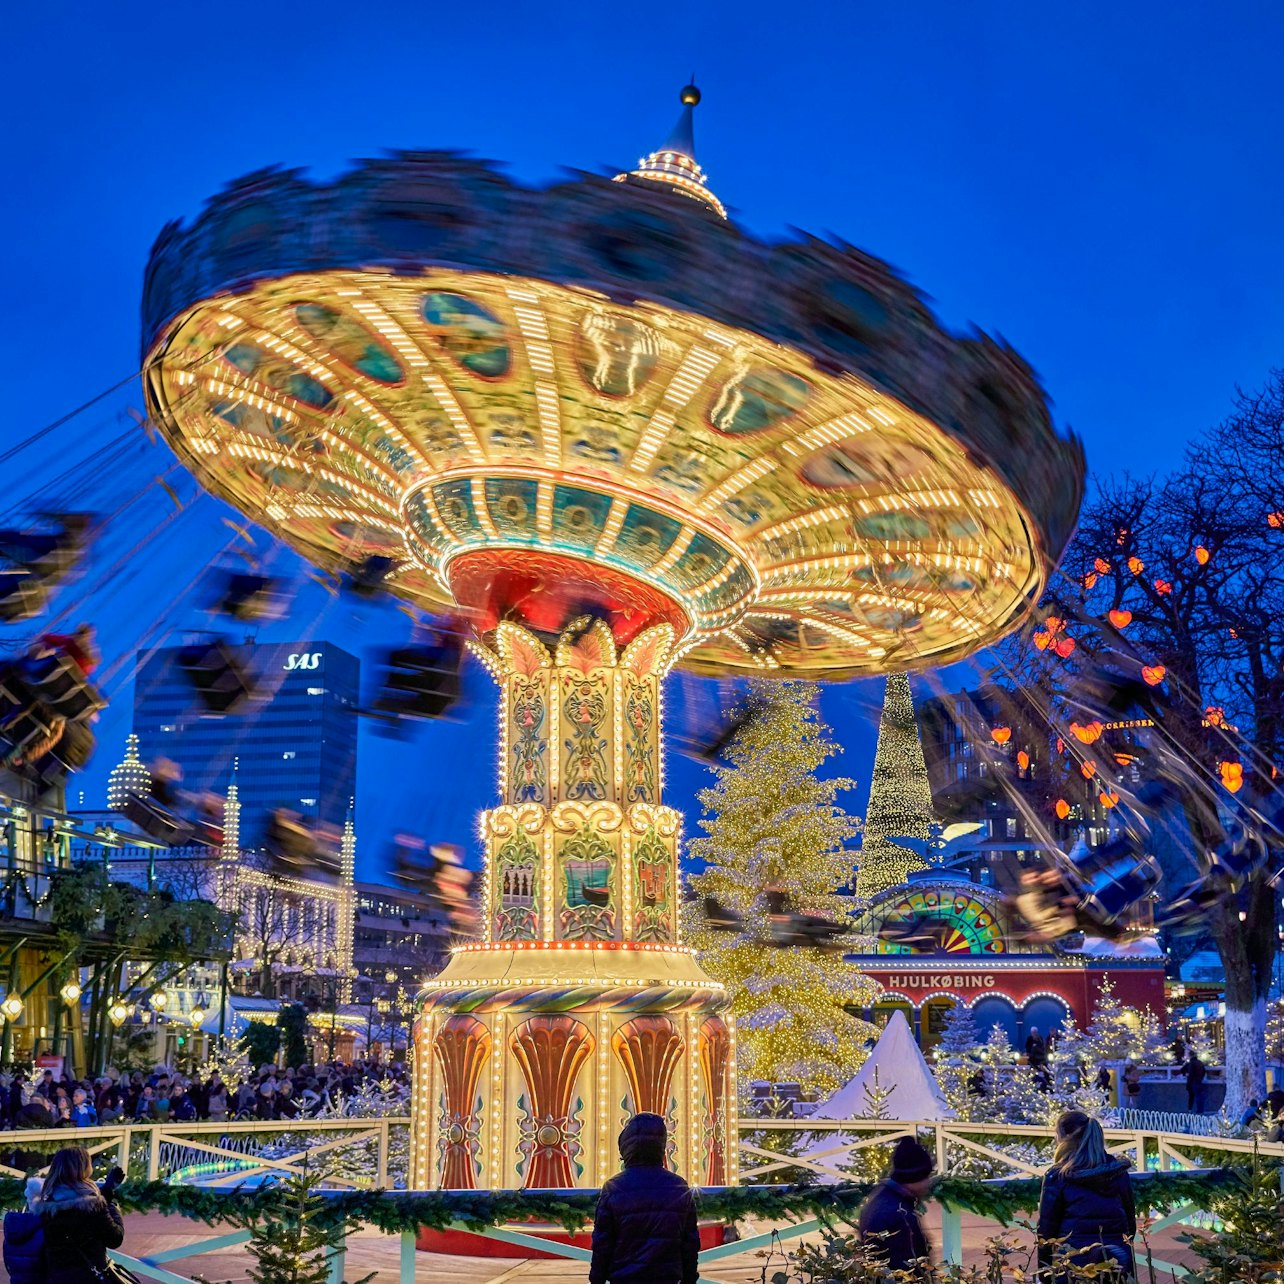 Tivoli Gardens Amusement Park - Accommodations in Copenhagen